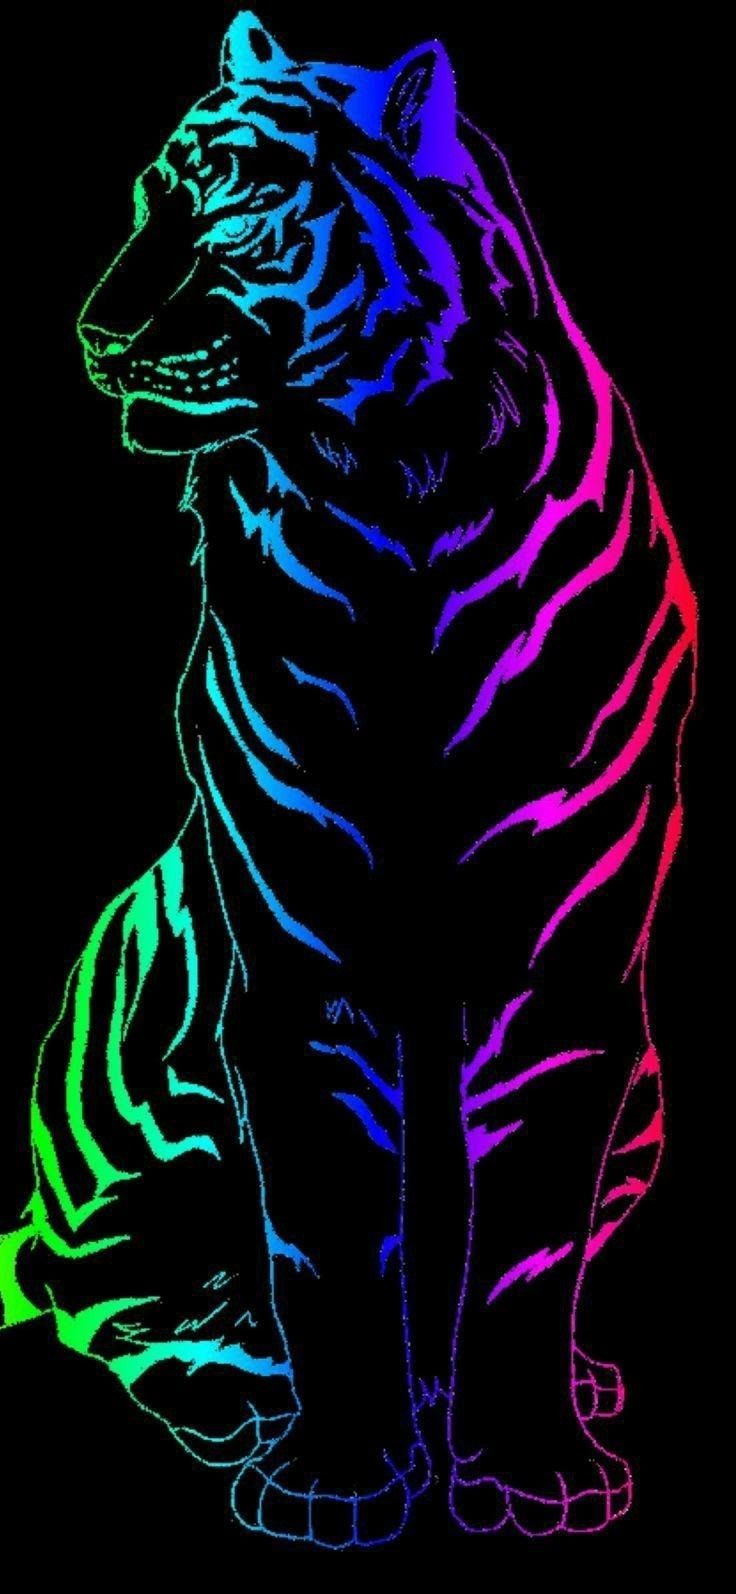  Tiere Hintergrundbild 736x1594. Tammy Garrido on Neon Wallpaper & Background. Big cats art, Tiger art, Animal wallpaper